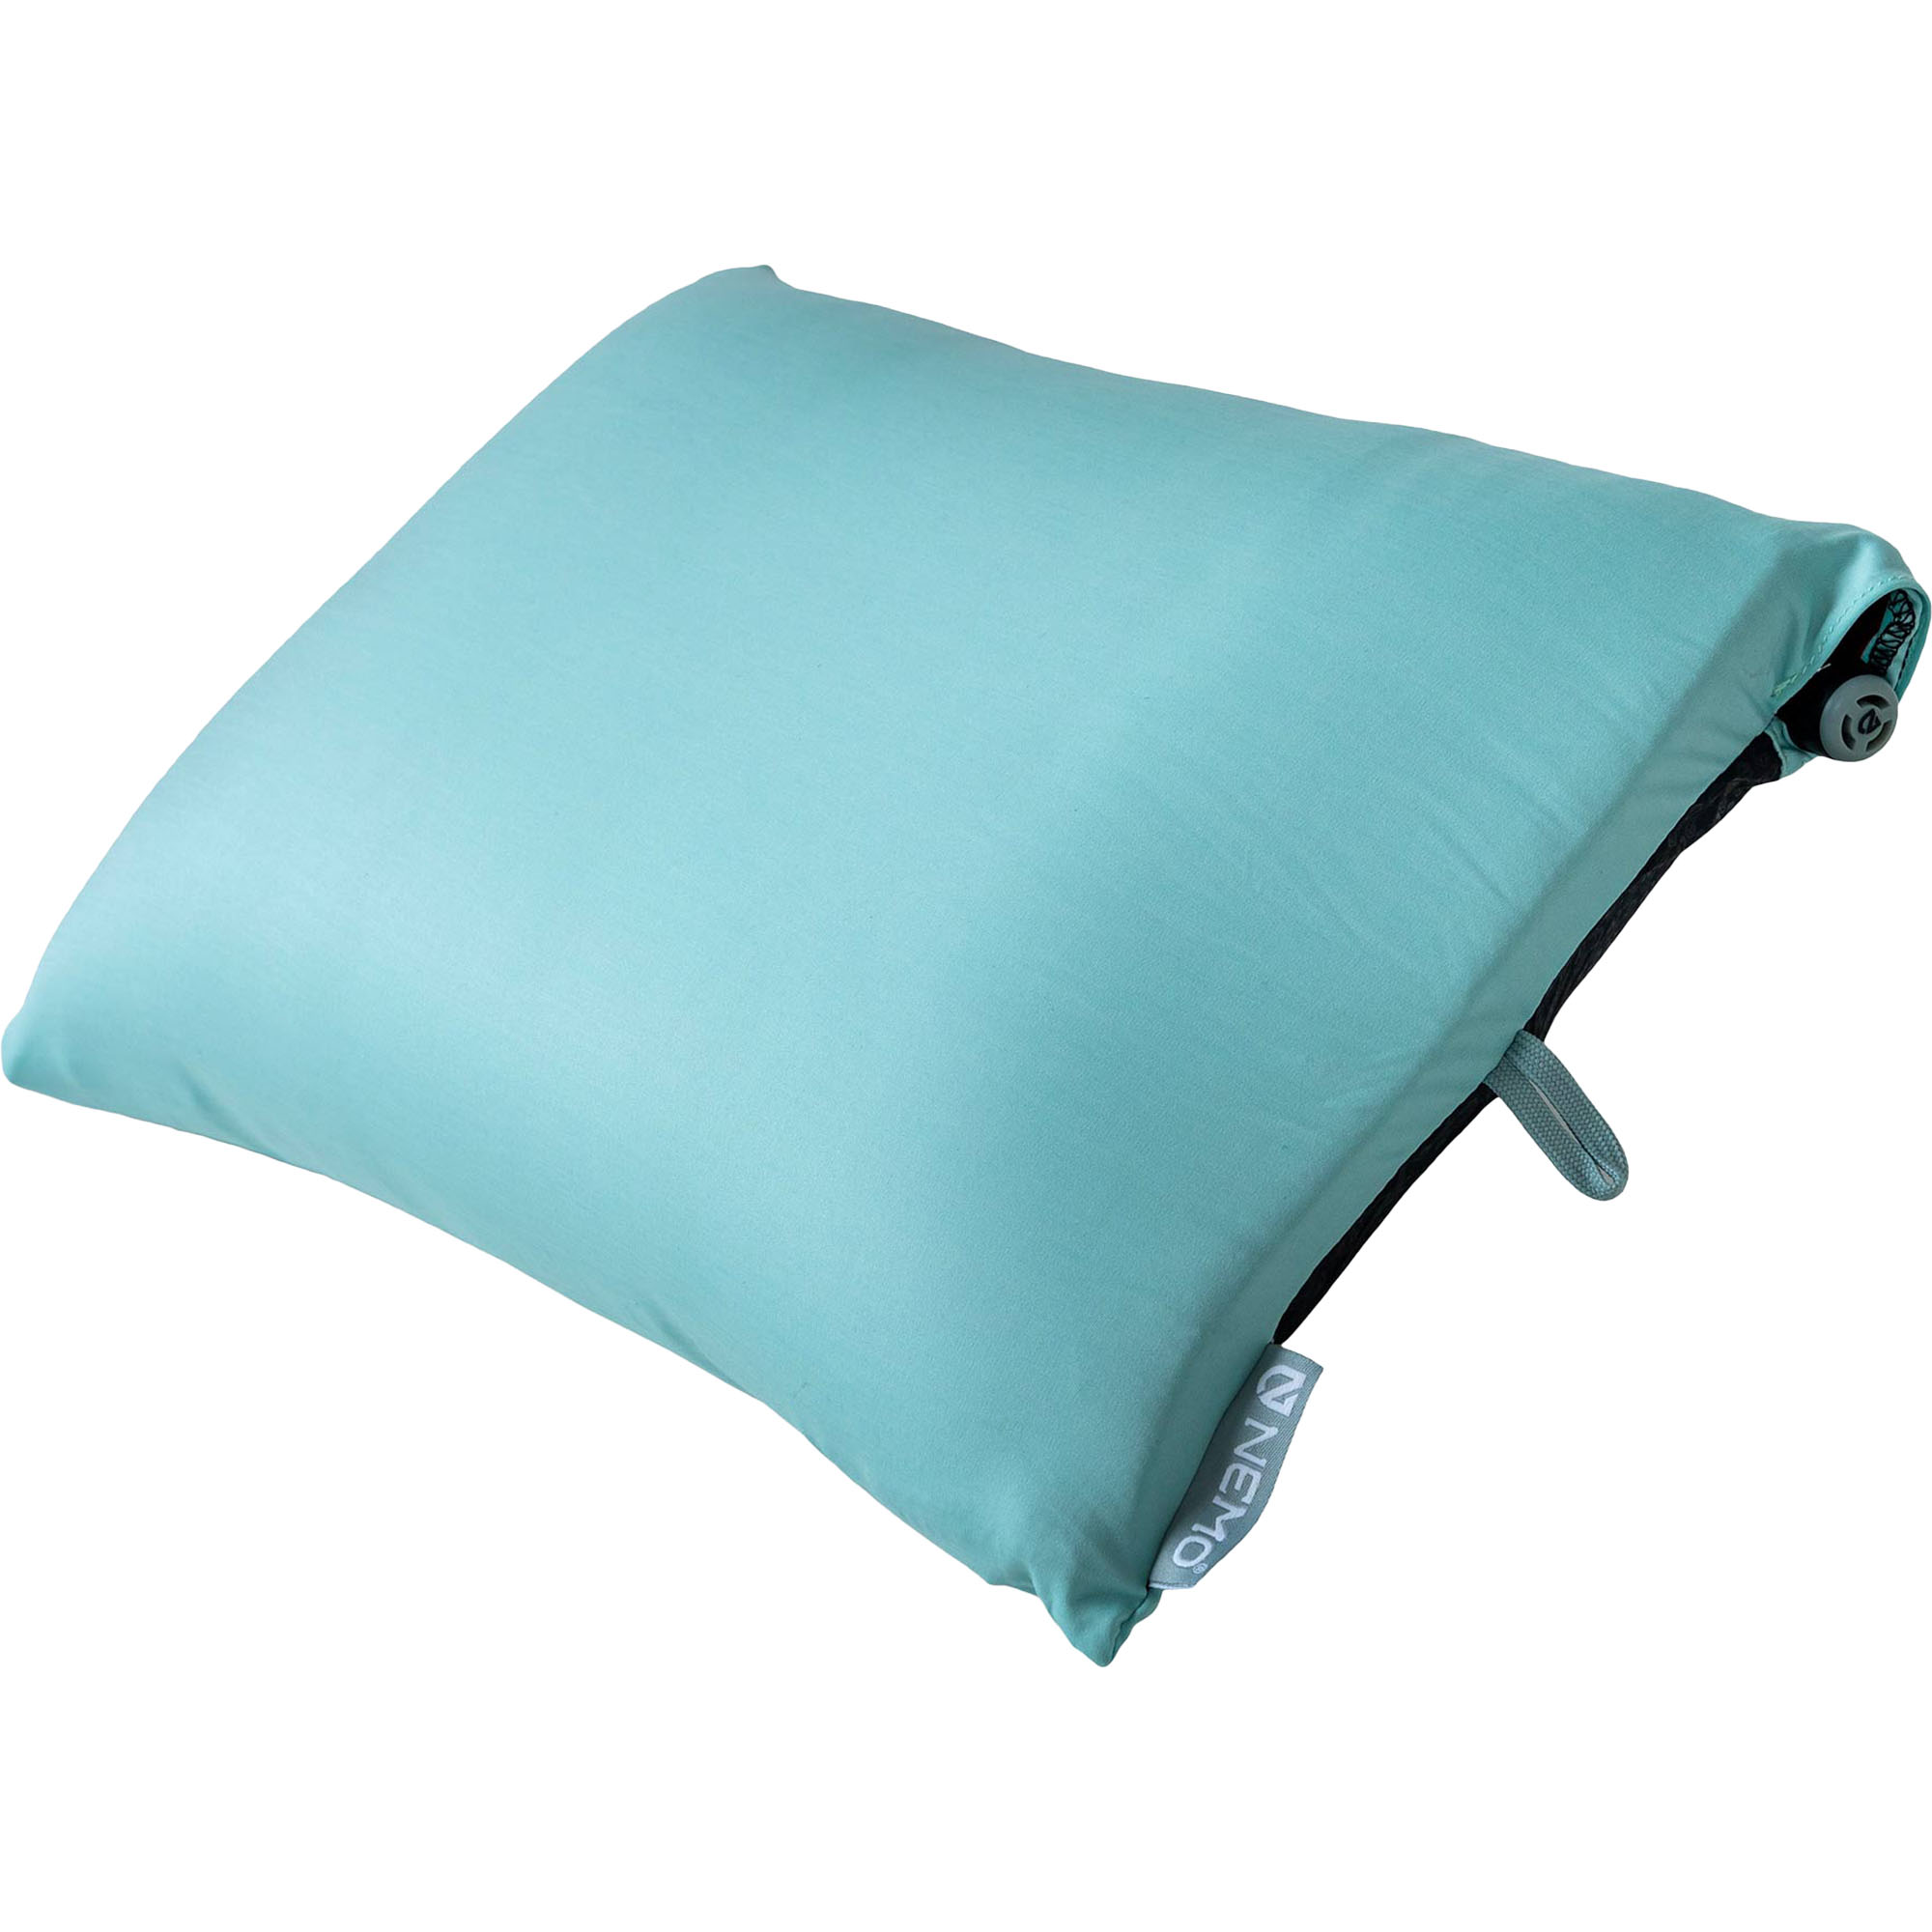 Nemo Fillo Ultralight Backpacking & Camping Pillow